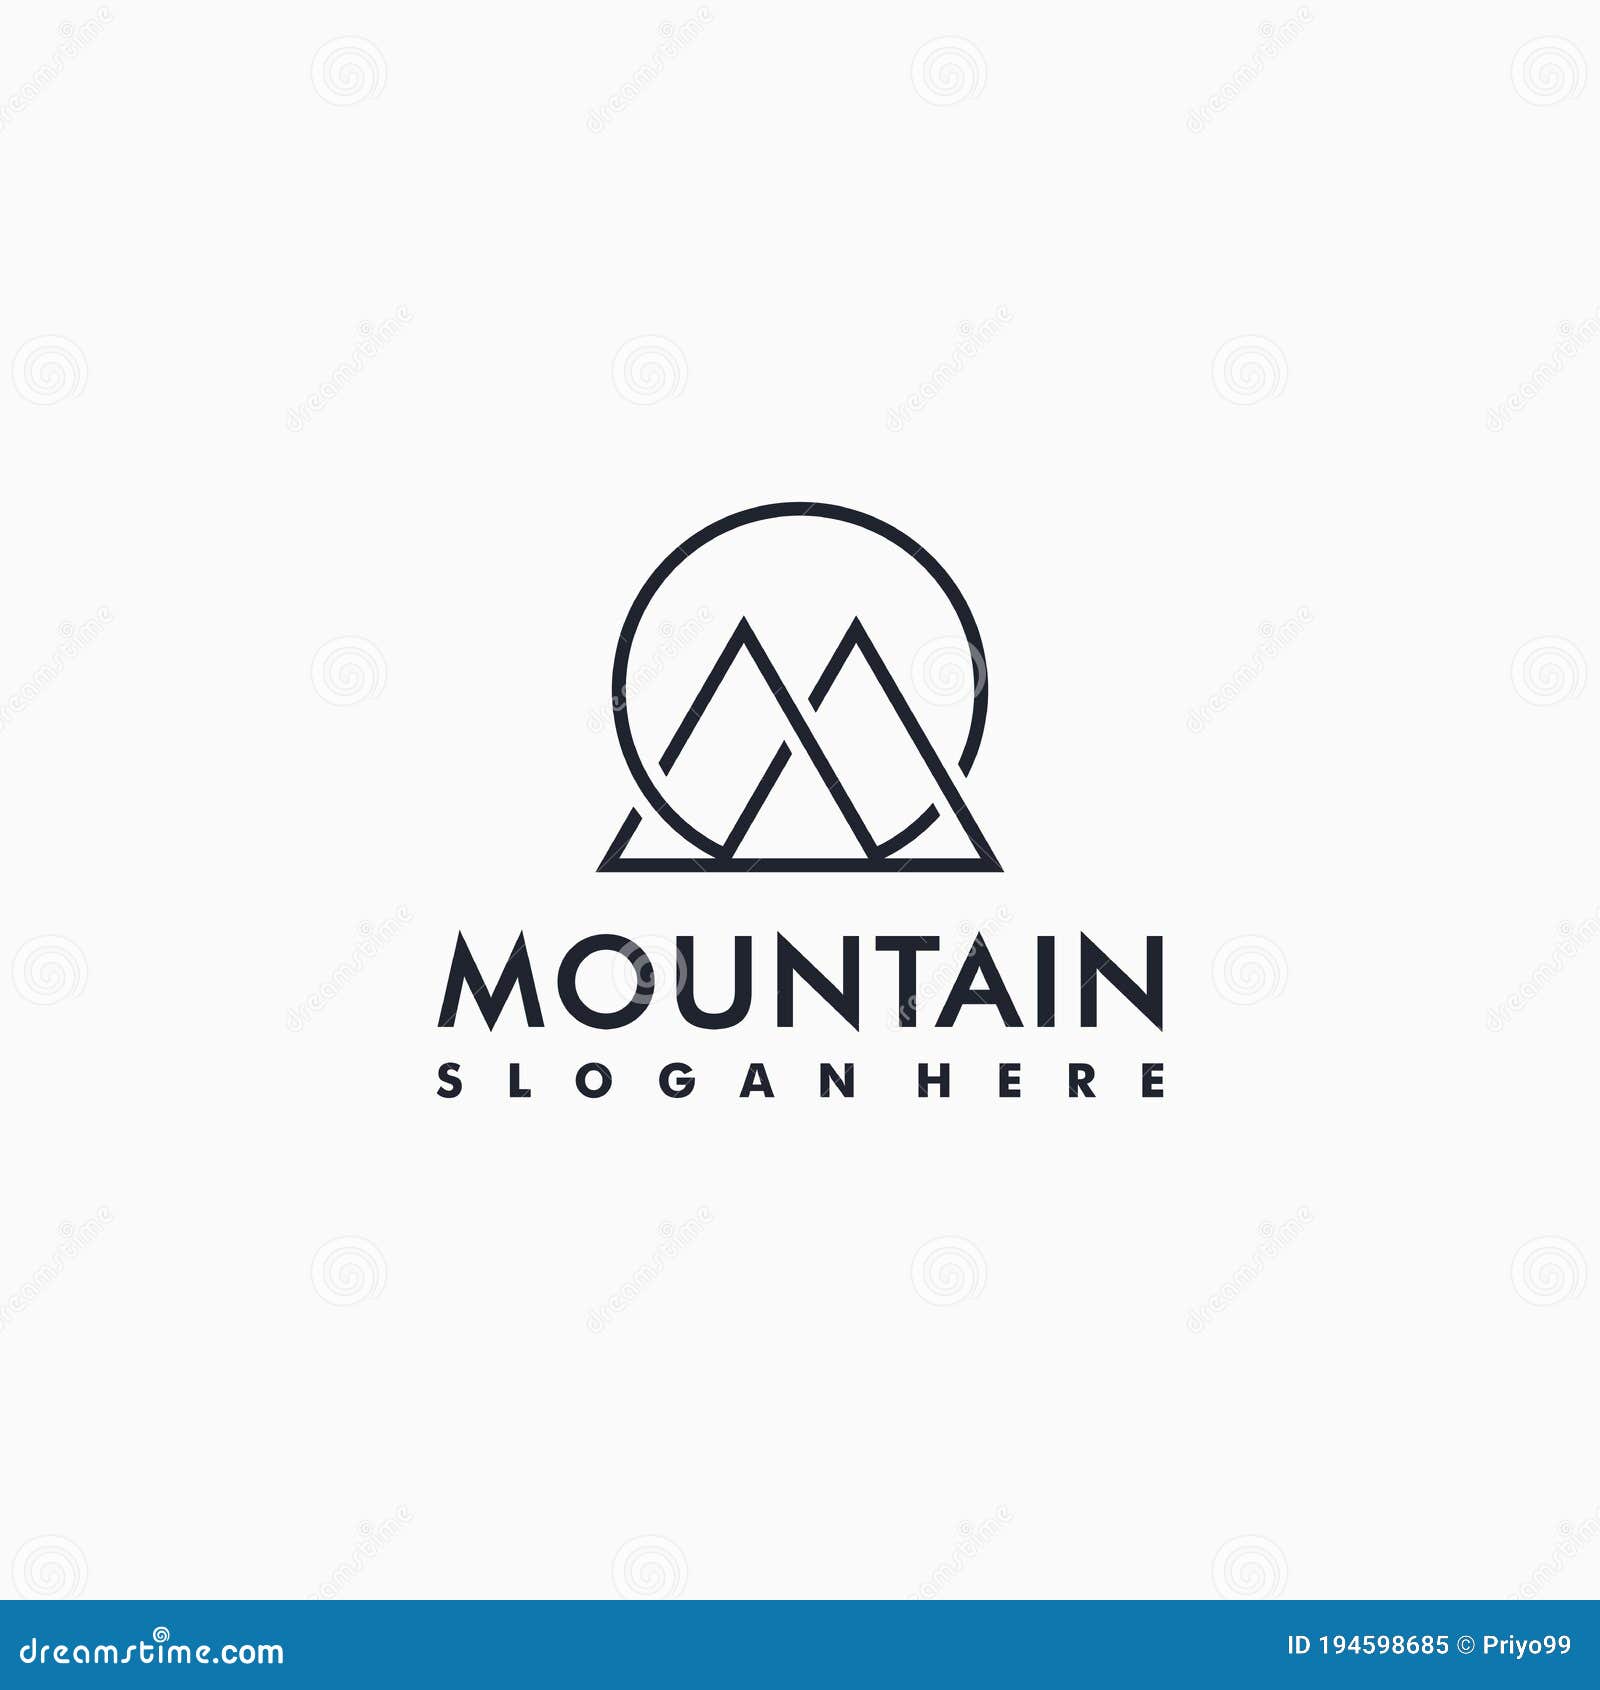 Cool Line Art Mountain Logo Design Inspiration Minimal Ideas Creative Premium Vector Stock Vector Illustration Of Isolated Logo